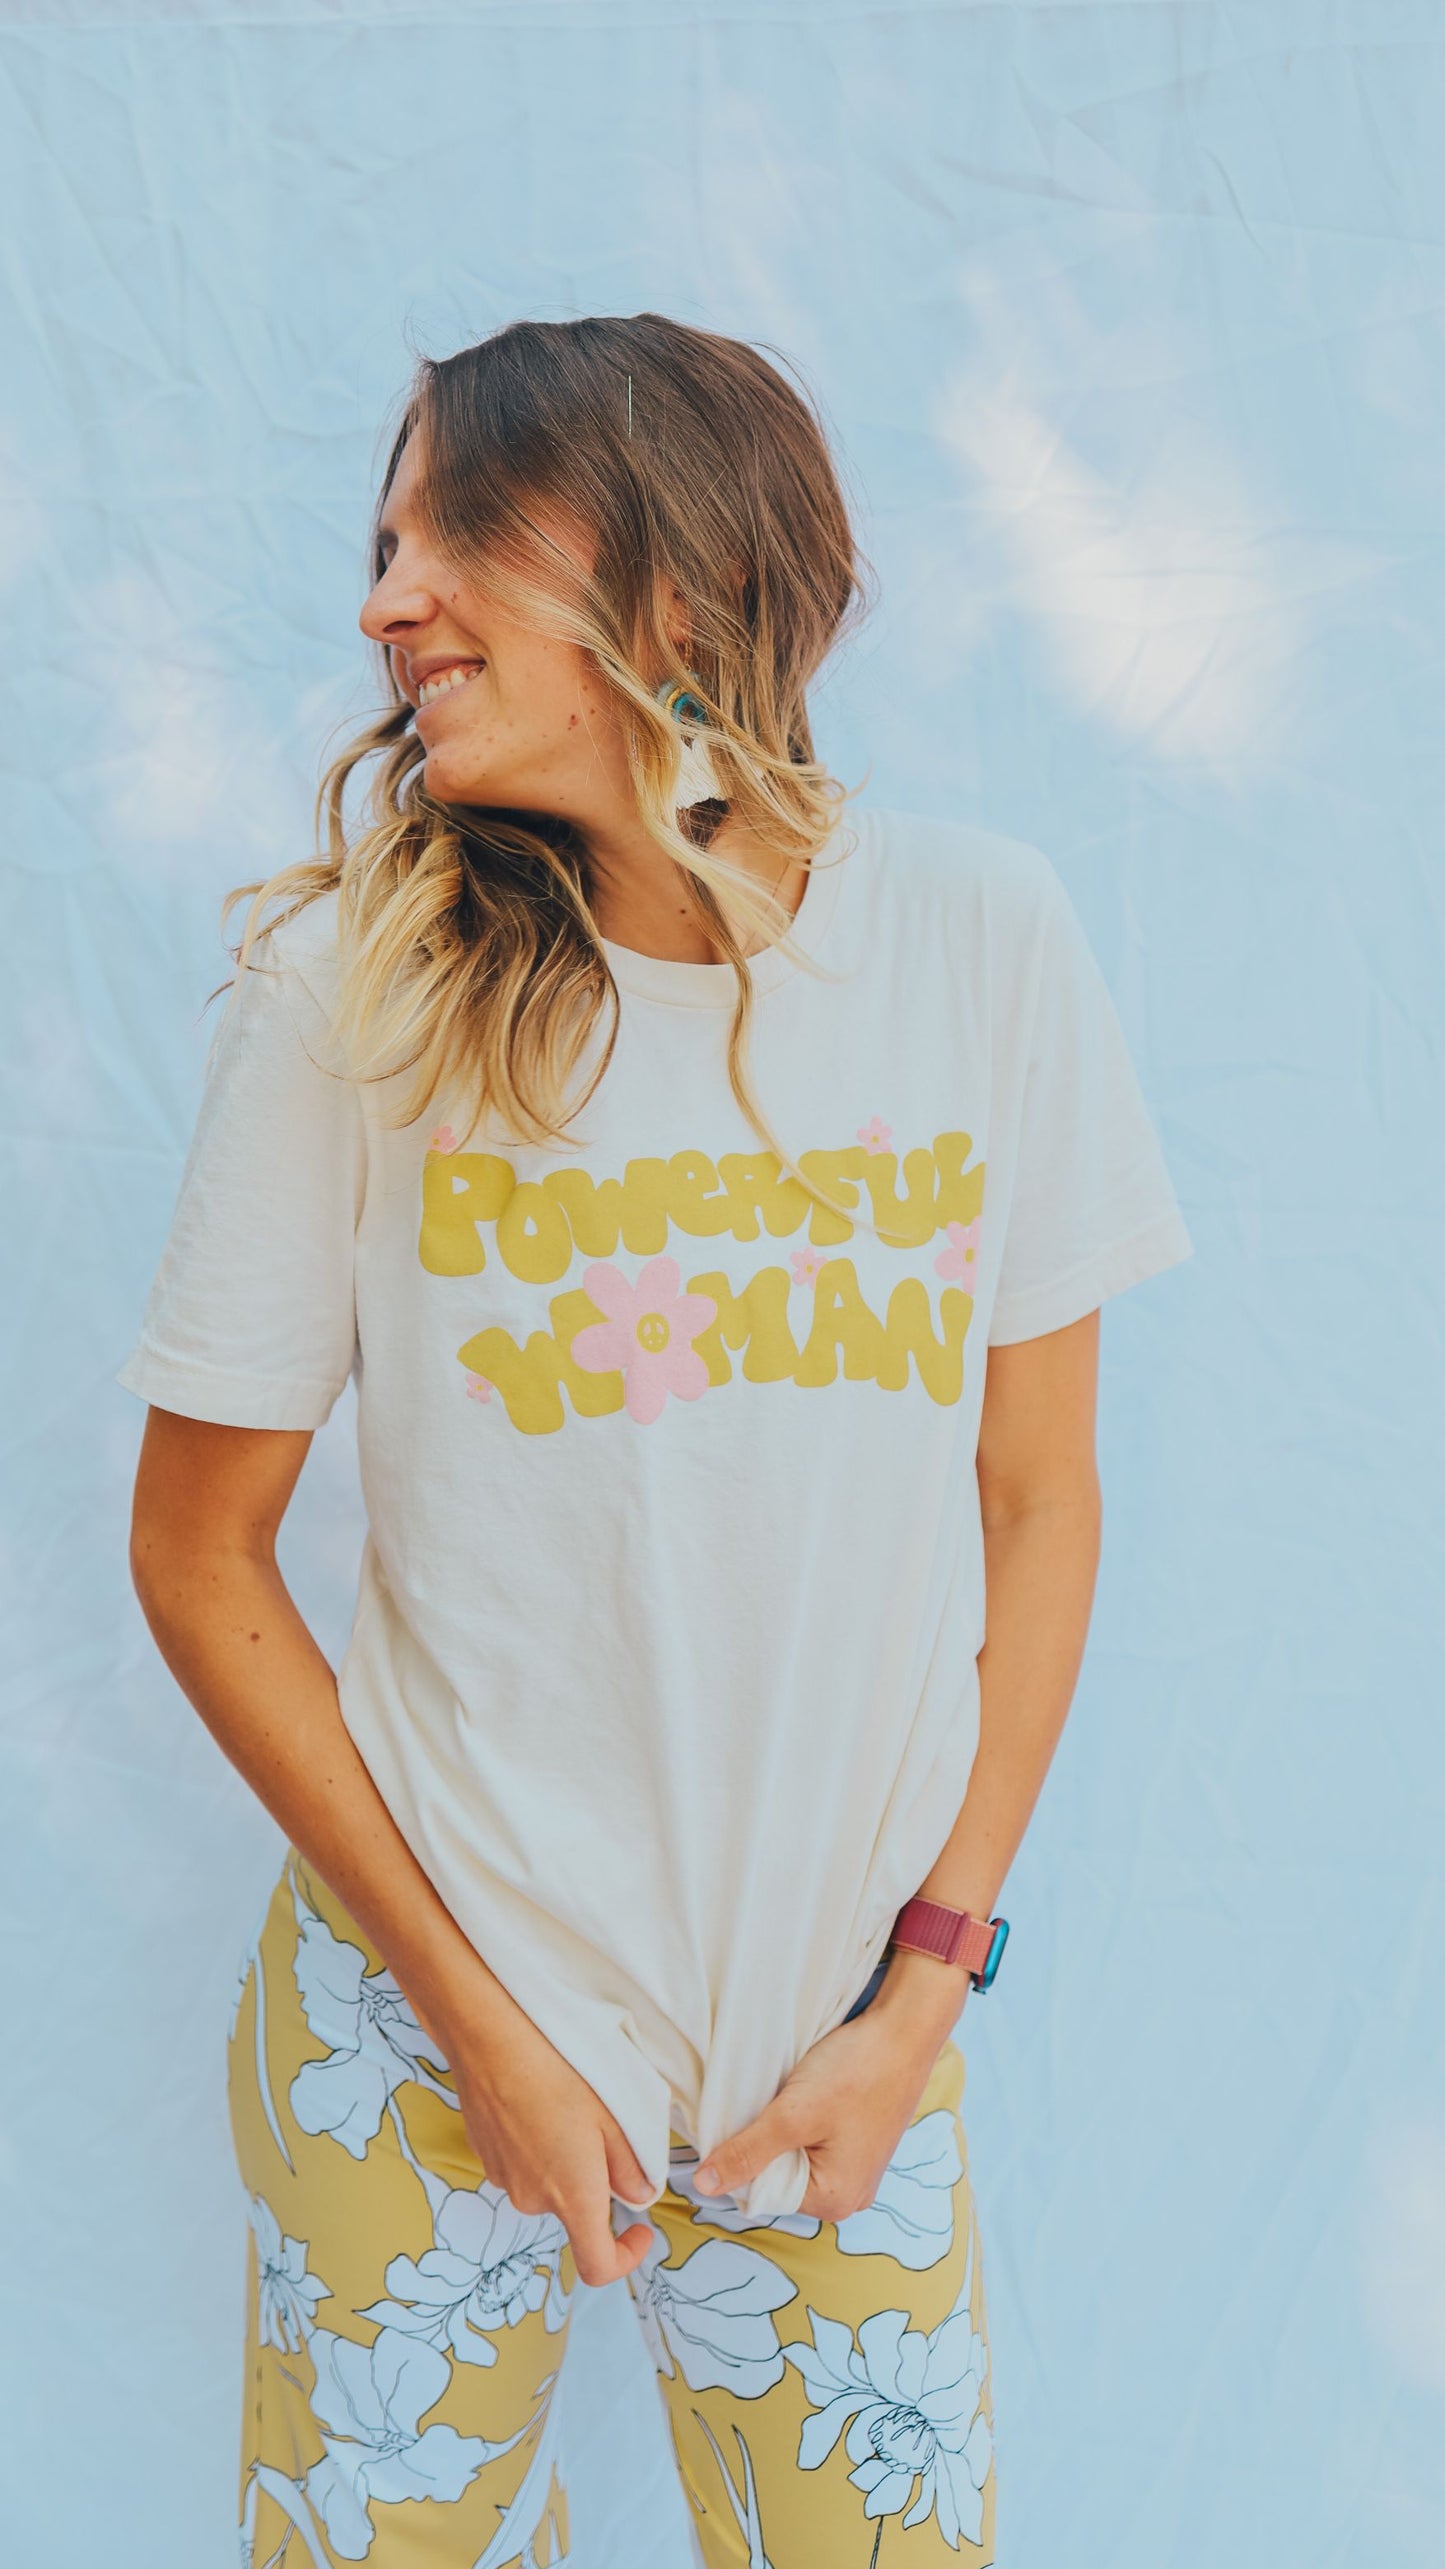 powerful woman tee| groovy shirt| granola girl aesthetic| granola girl clothing.